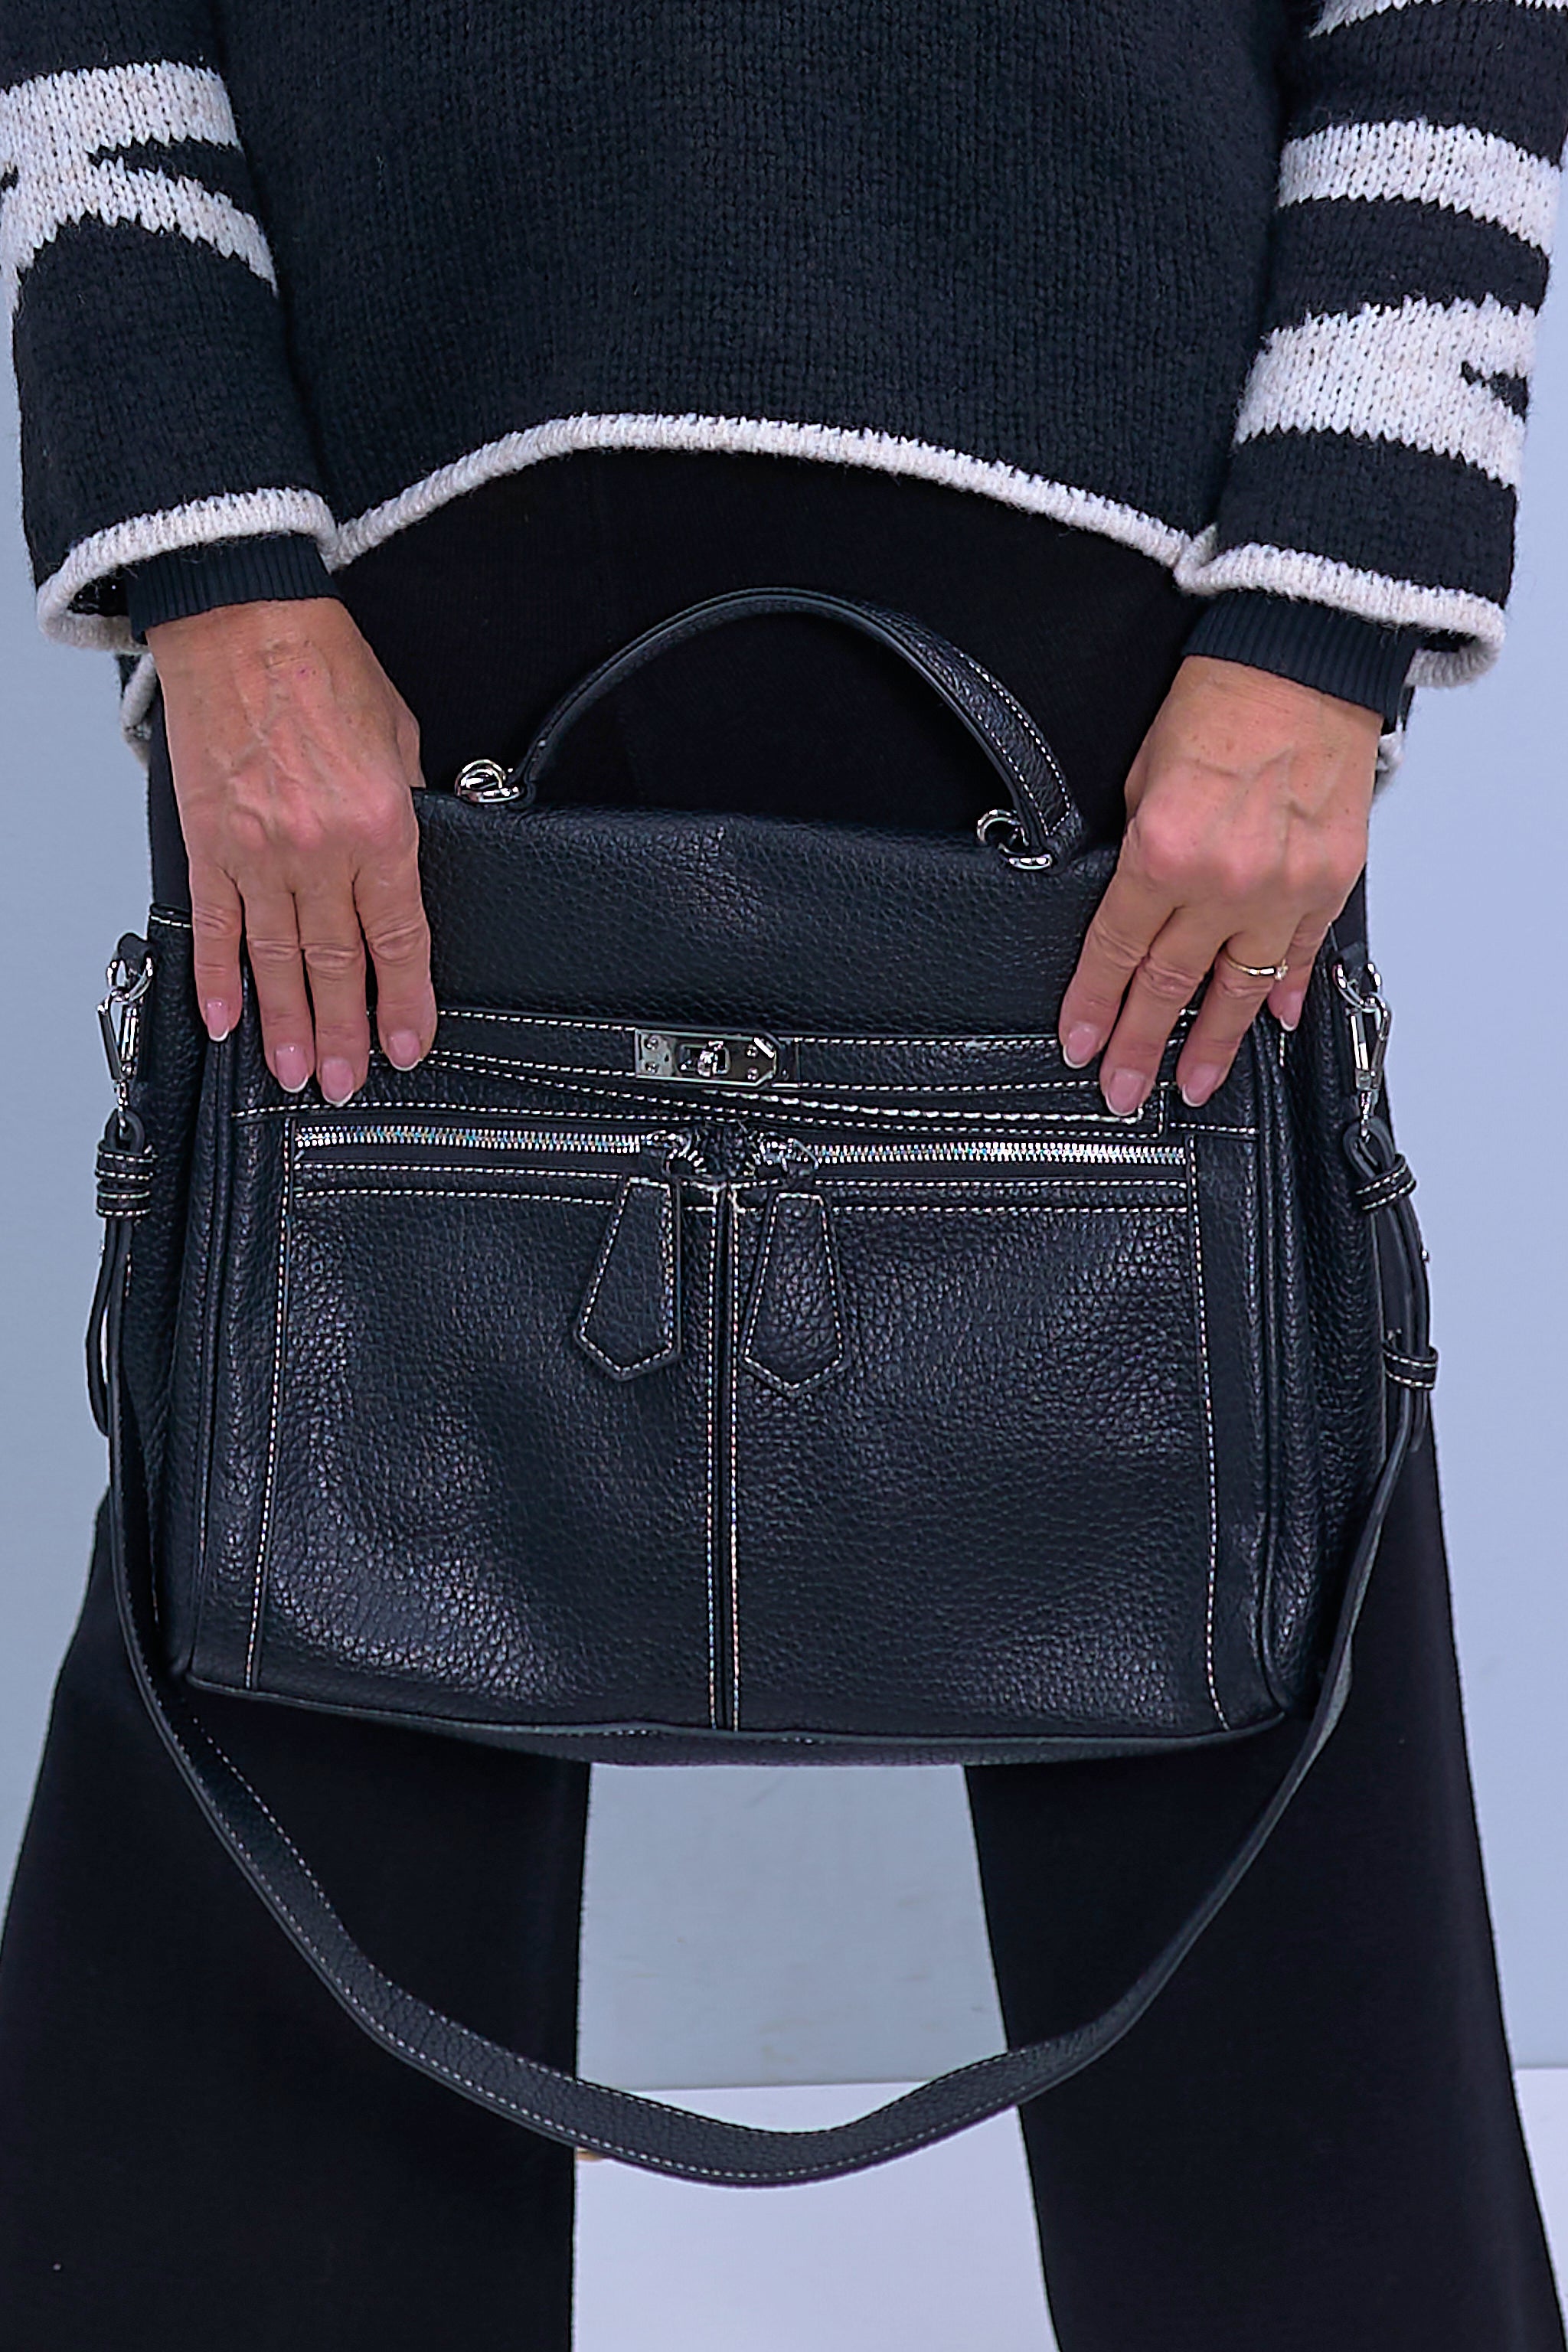 Fashionable handle bag, black